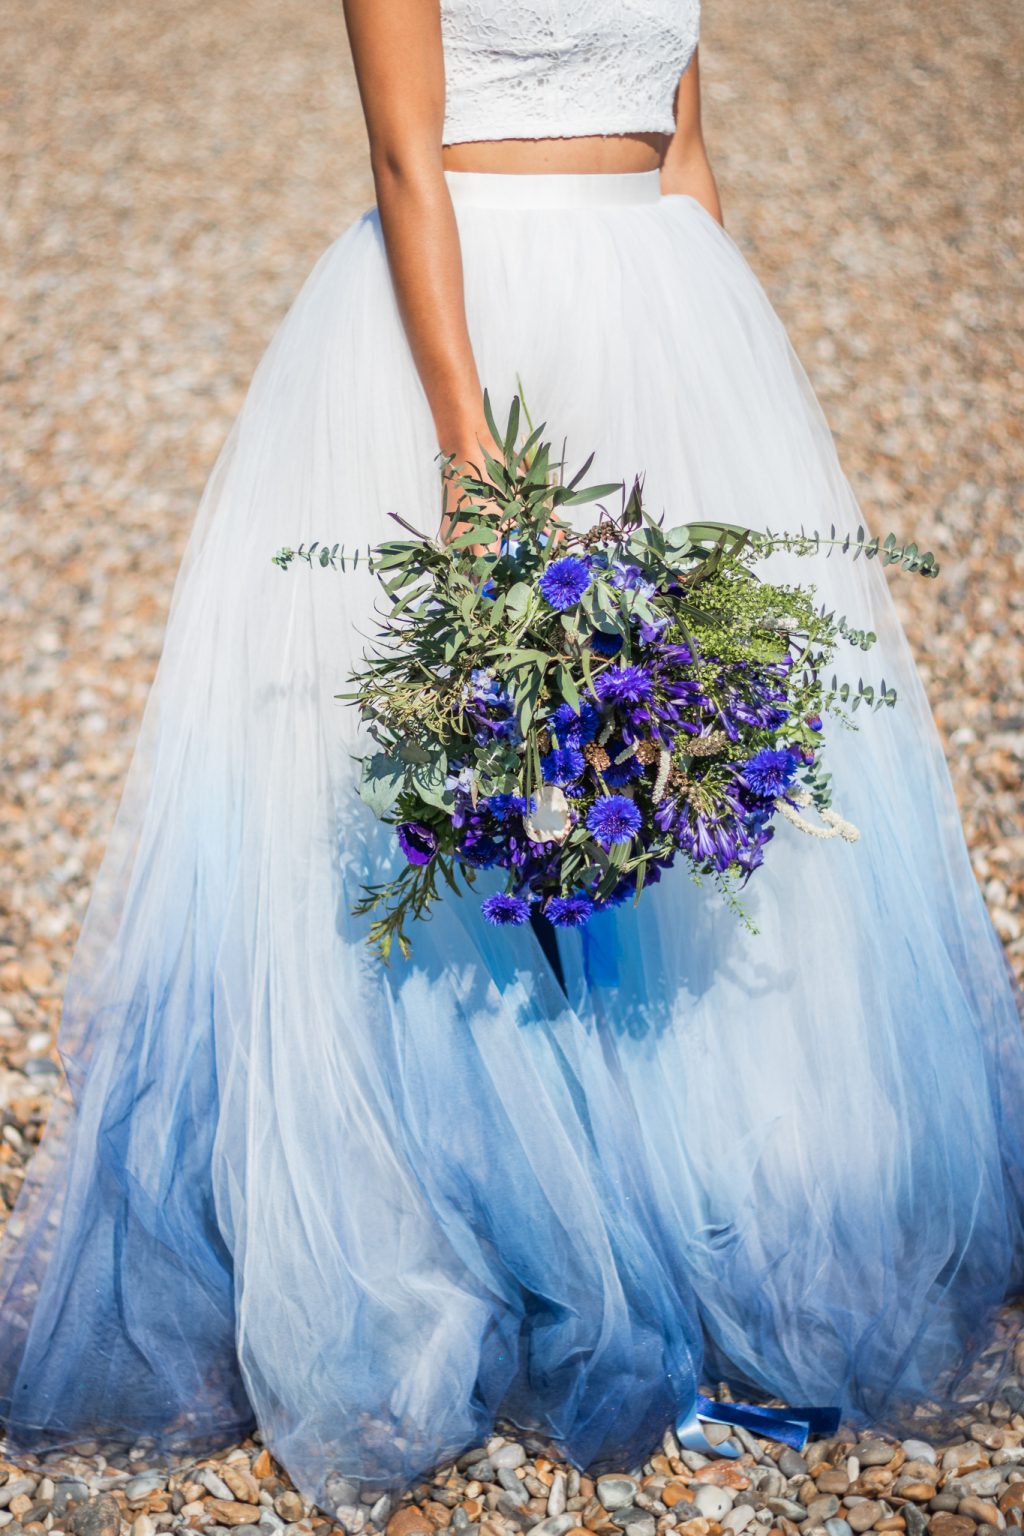 Boho Beach Wedding with Ombre Dress and Blue Wedding Cake